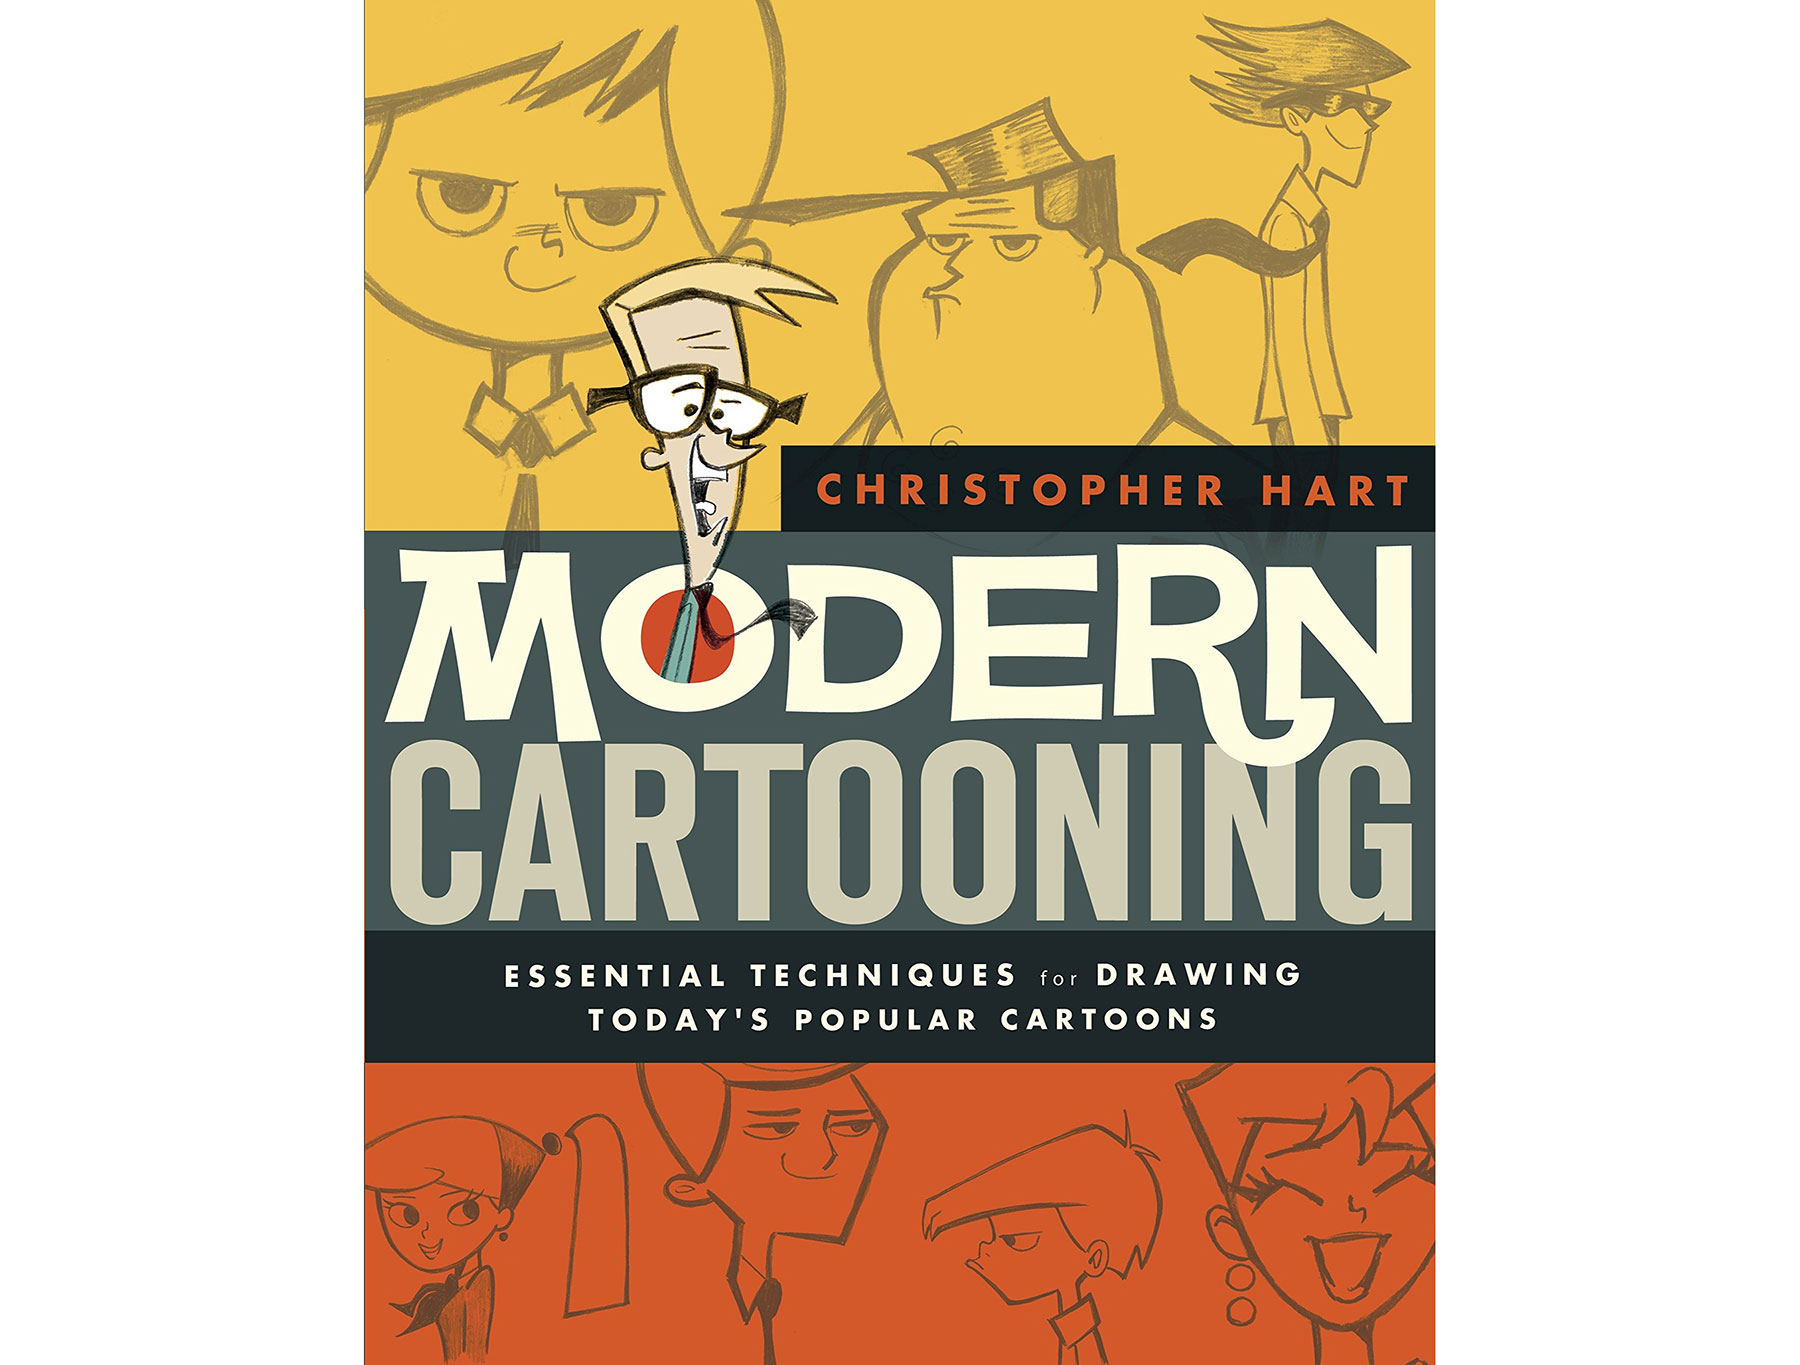 Best drawing books: Modern cartooning